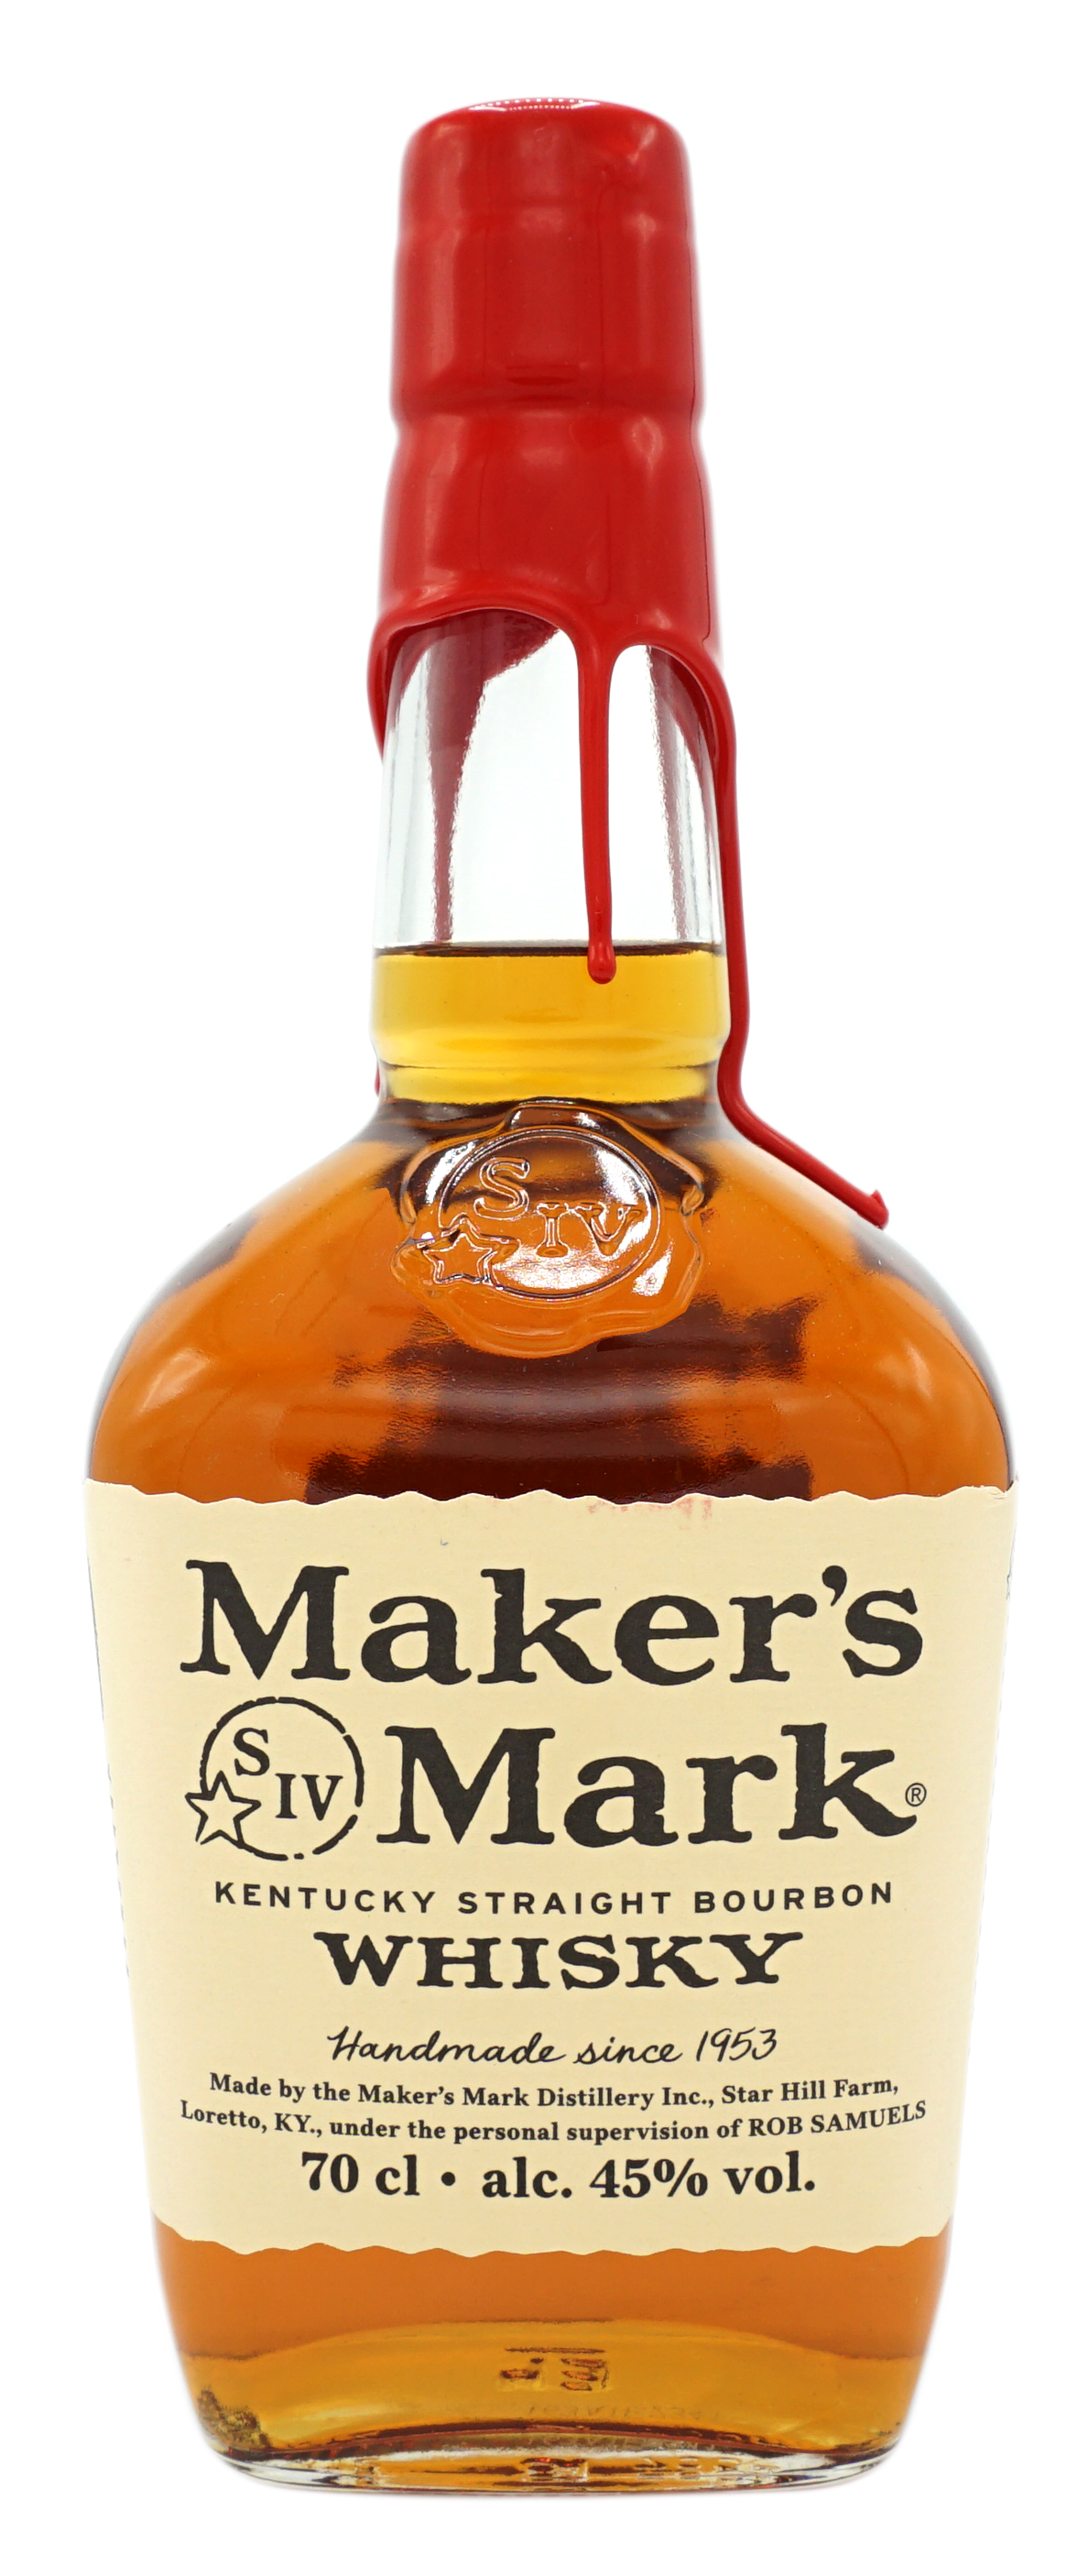 MakersMark KentuckyStraightBourbon 45% Fles